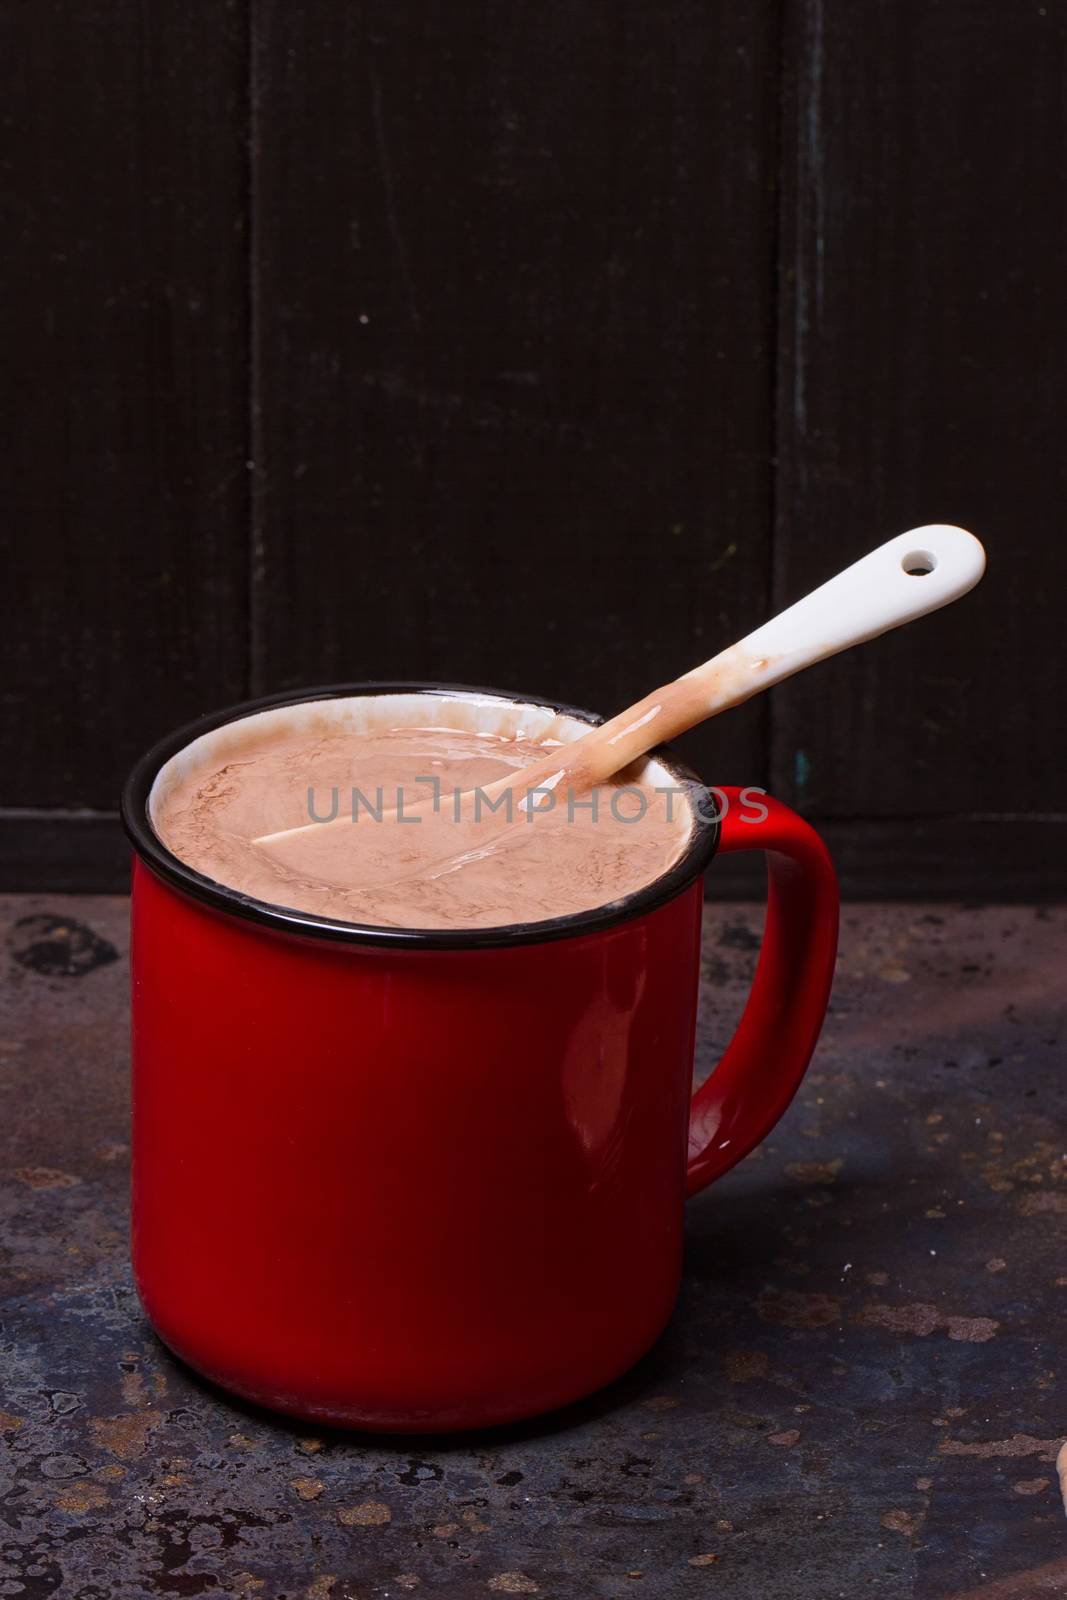 Hot chocolate in red mug by victosha